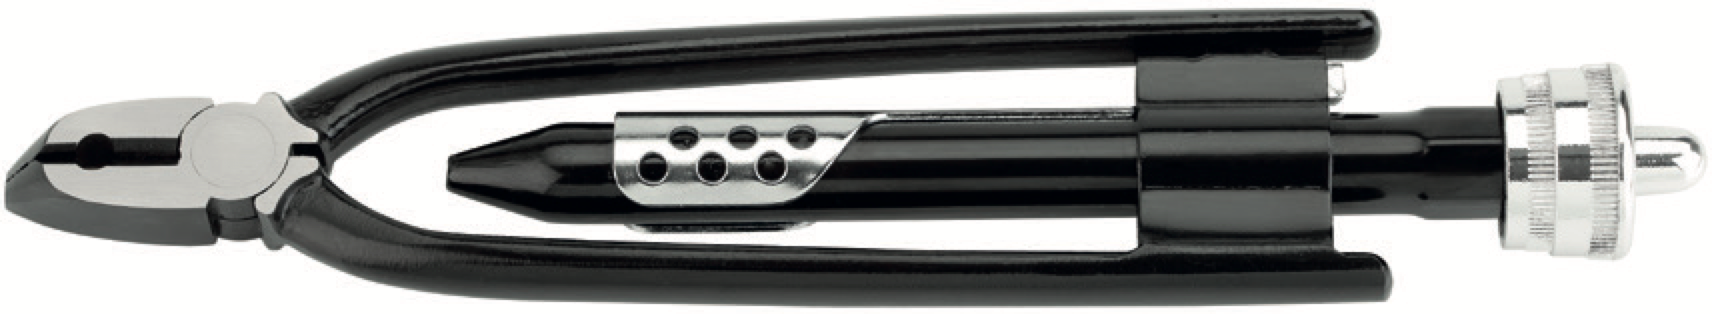 ELORA 525 Wire Twisting Plier (ELORA Tools) - Premium Wire Twisting Plier from ELORA - Shop now at Yew Aik.